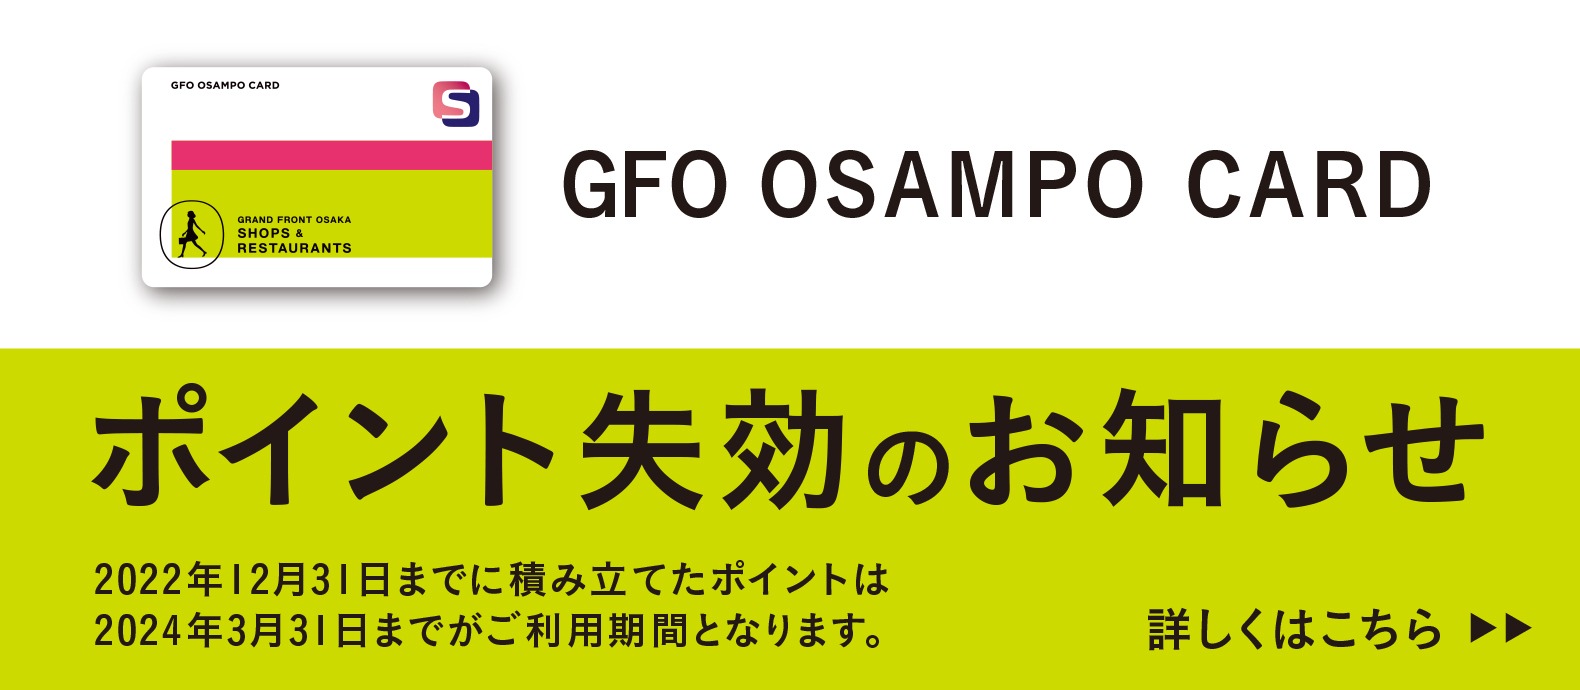 GRAND FRONT OSAKA SHOPS & RESTAURANTS